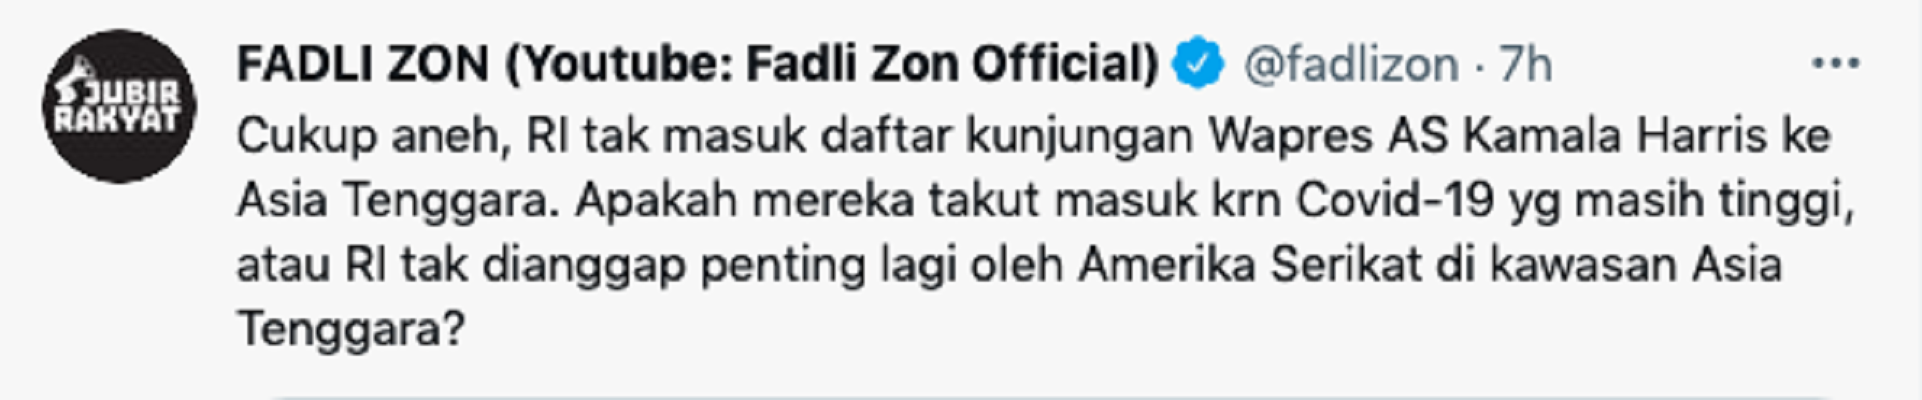 Fadli Zon menyoroti kabar tak masuknya Indonesia dalam kunjungan Wapres AS Kamala Harris.